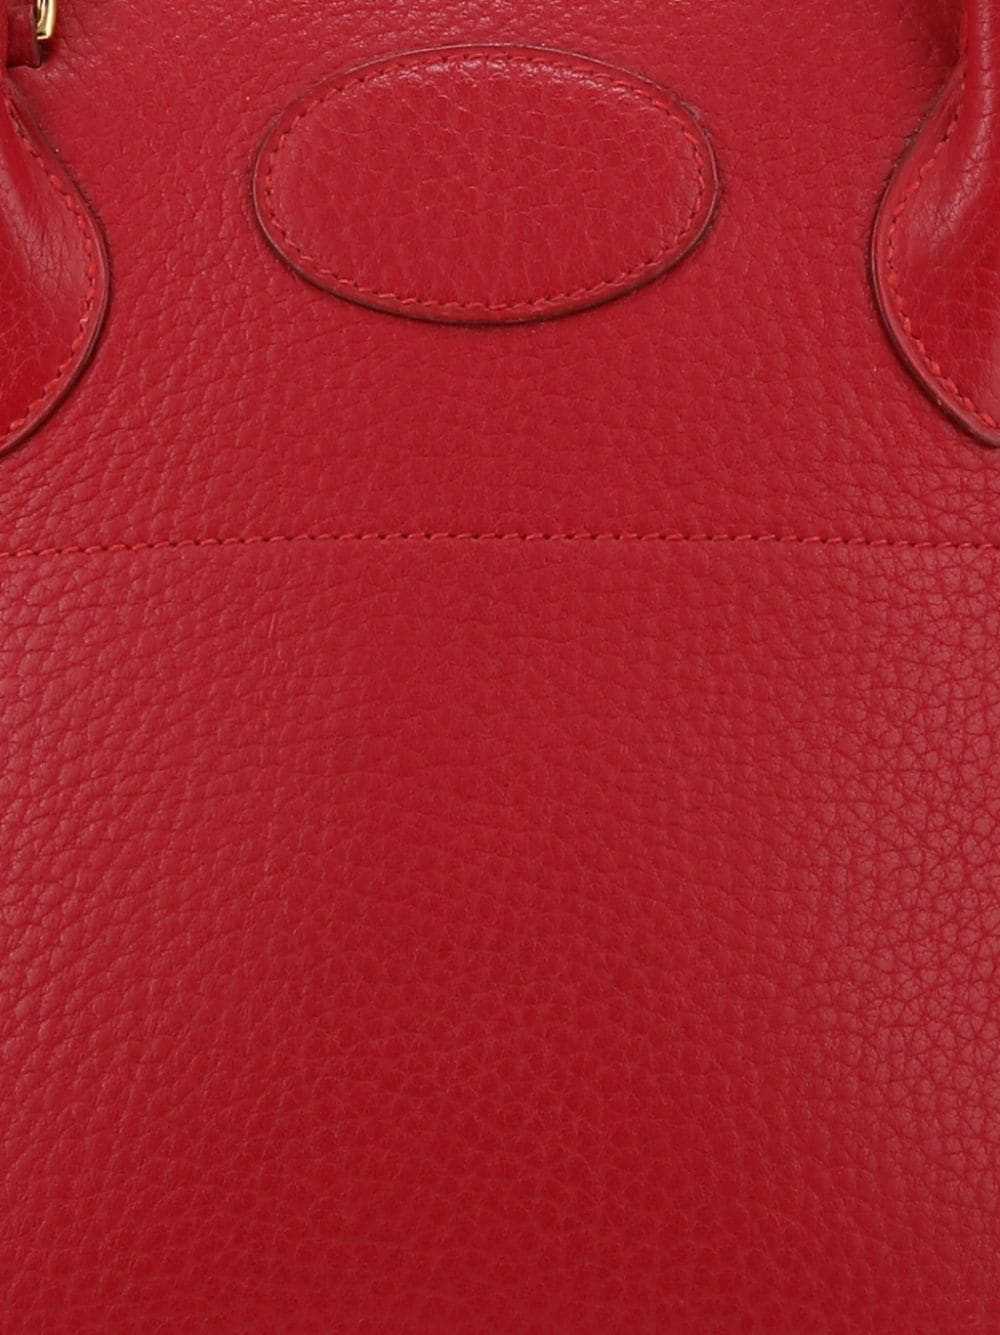 Hermès Pre-Owned 1994 Bolide 31 handbag - Red - image 4